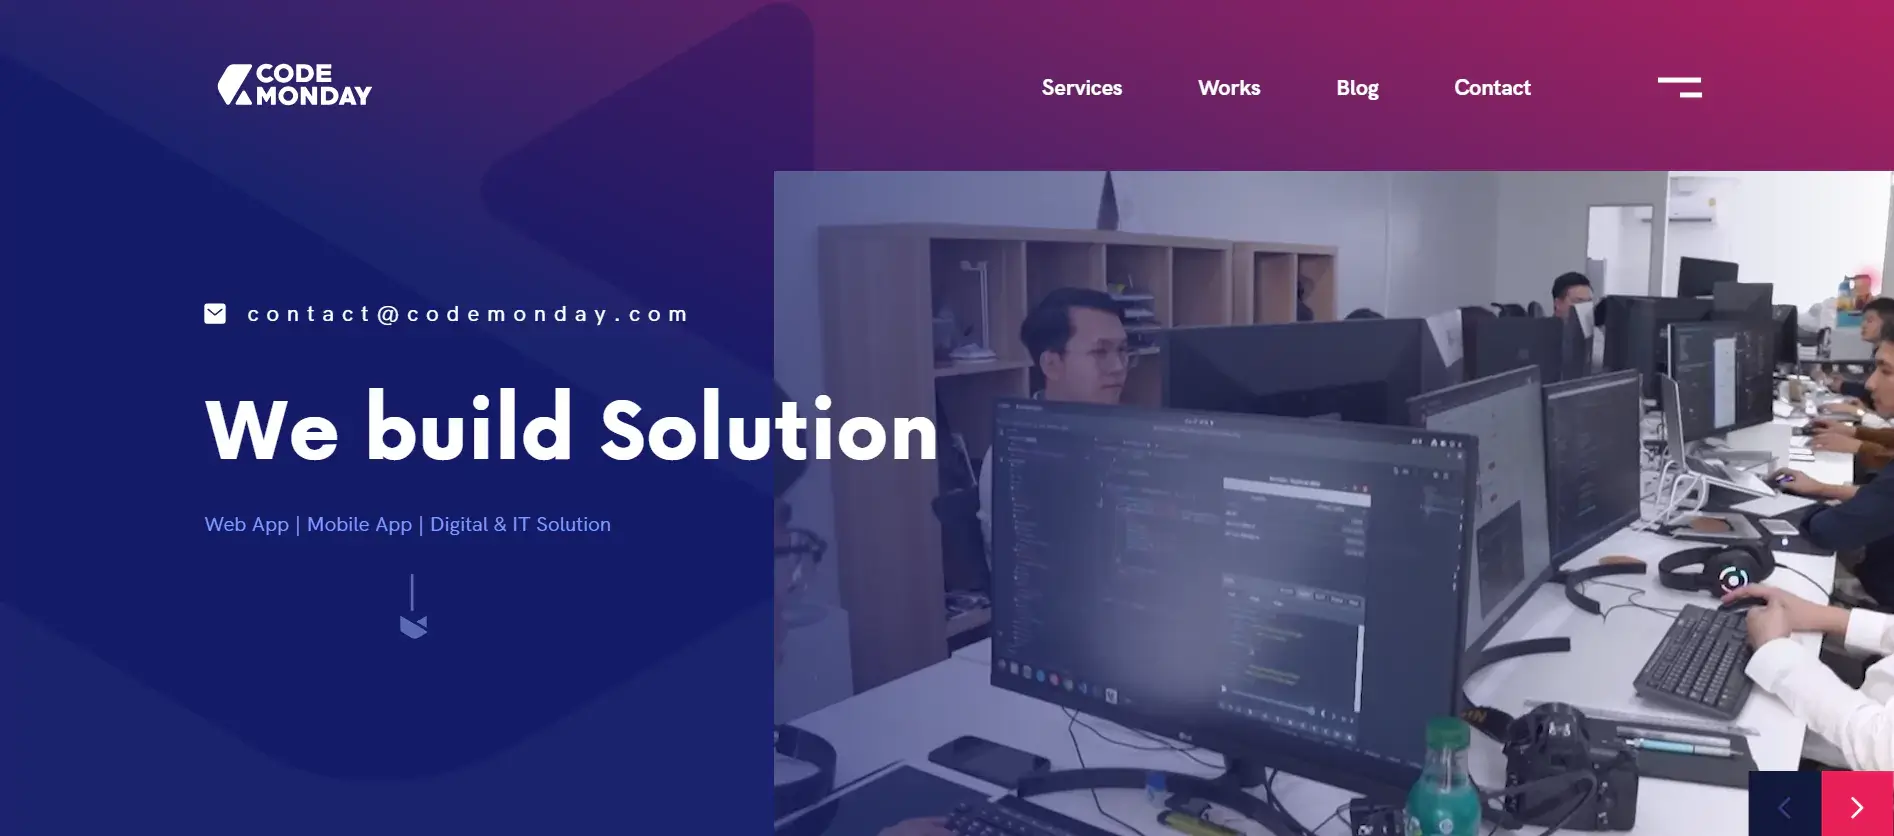 Website development company in Thailand - Codemonday